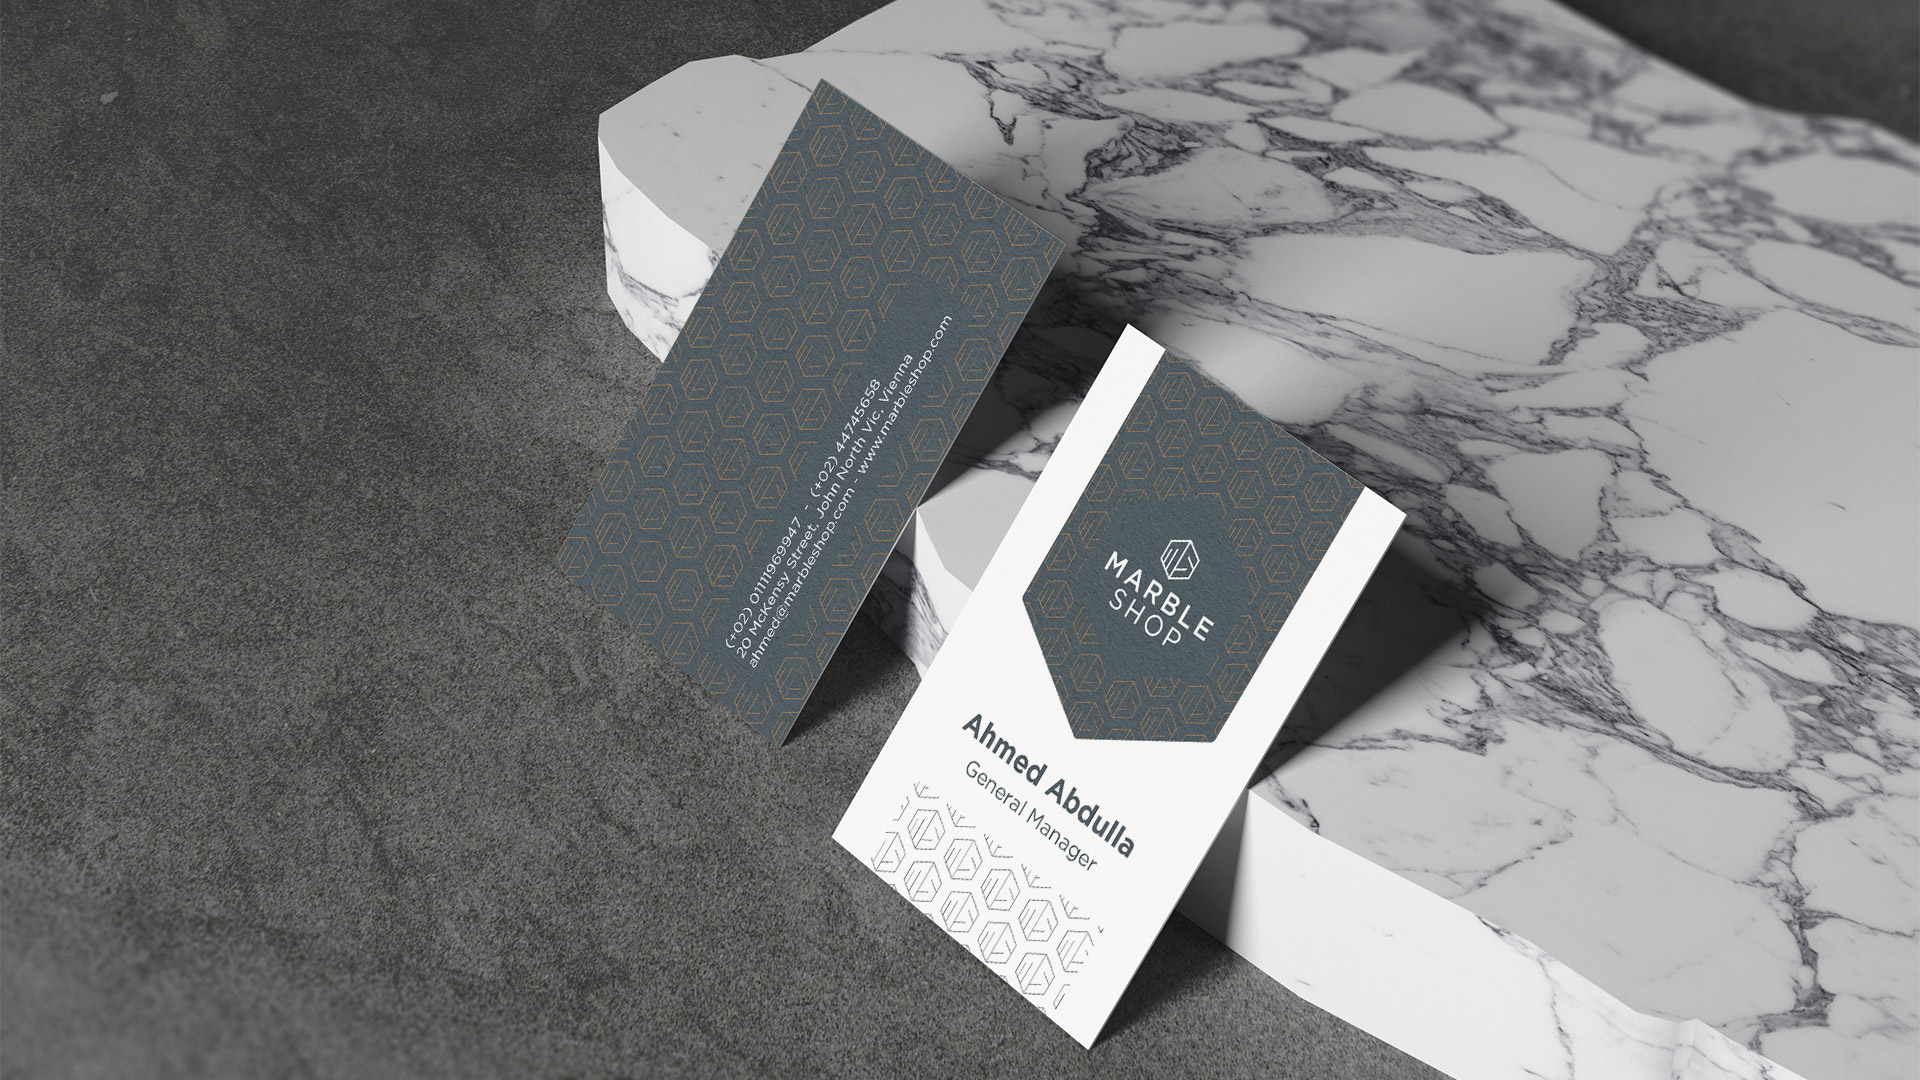 marble shop logo design branding elements business cards printing